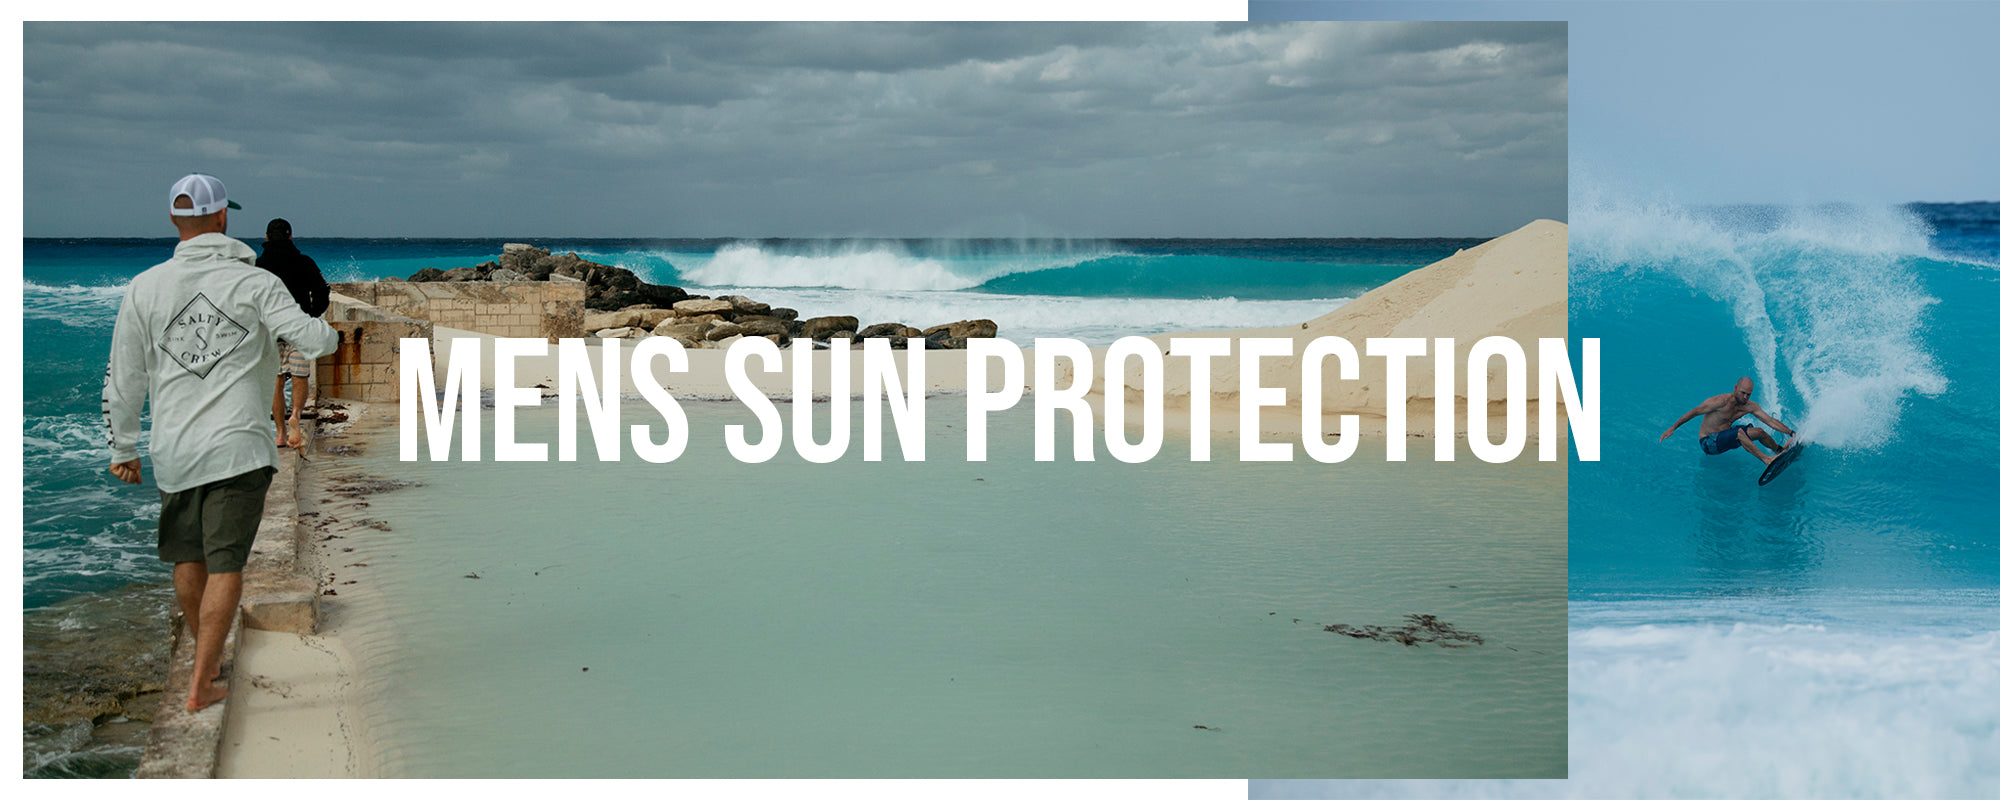 UV Fishing Clothing and sun protective clothing